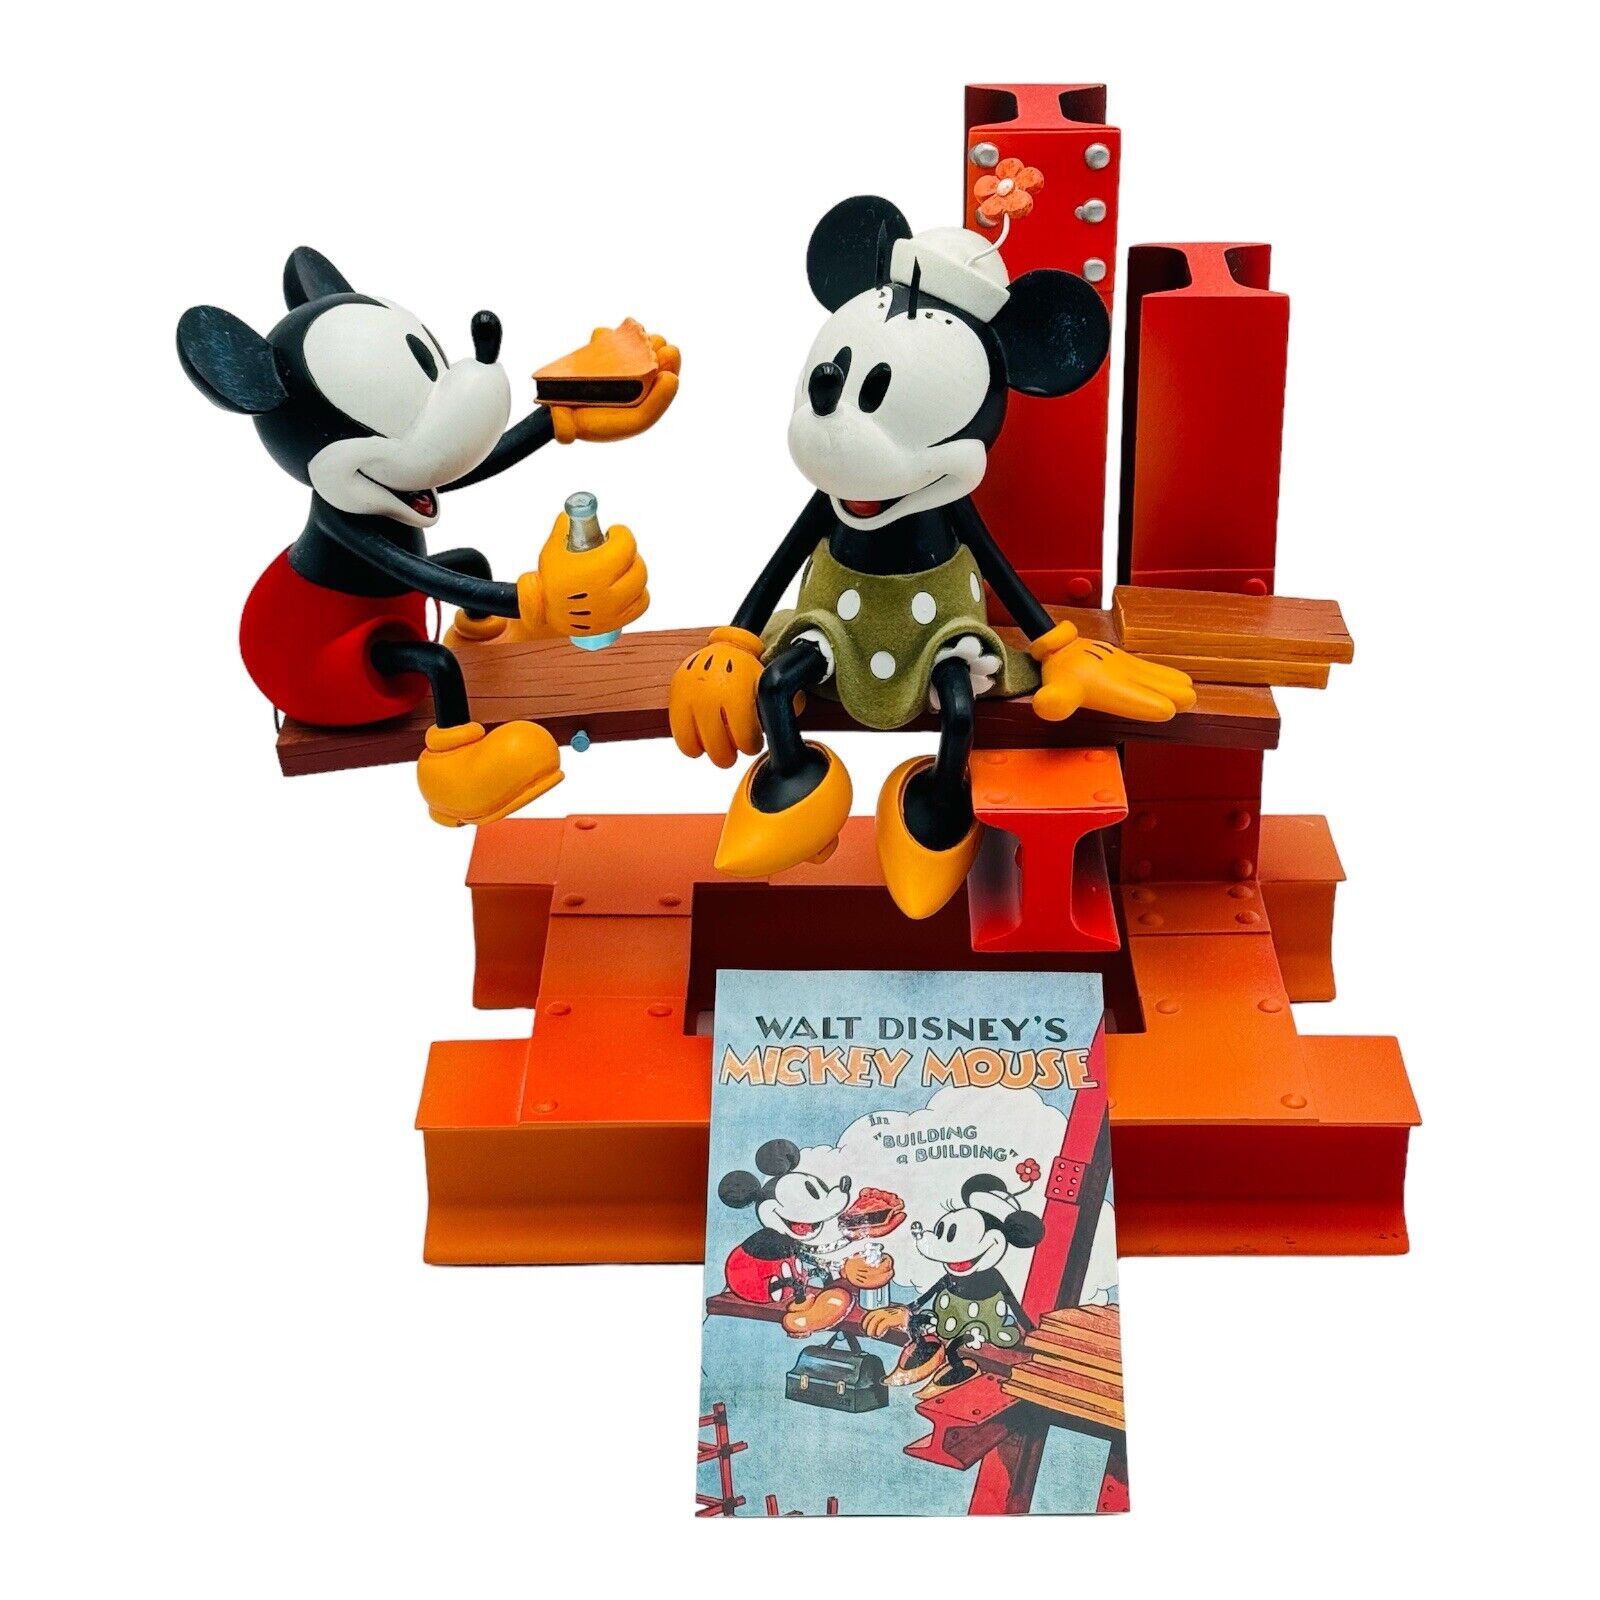 Disney Mickey & Minnie Building A Building Sculpture Limited Edition 2000 W COA